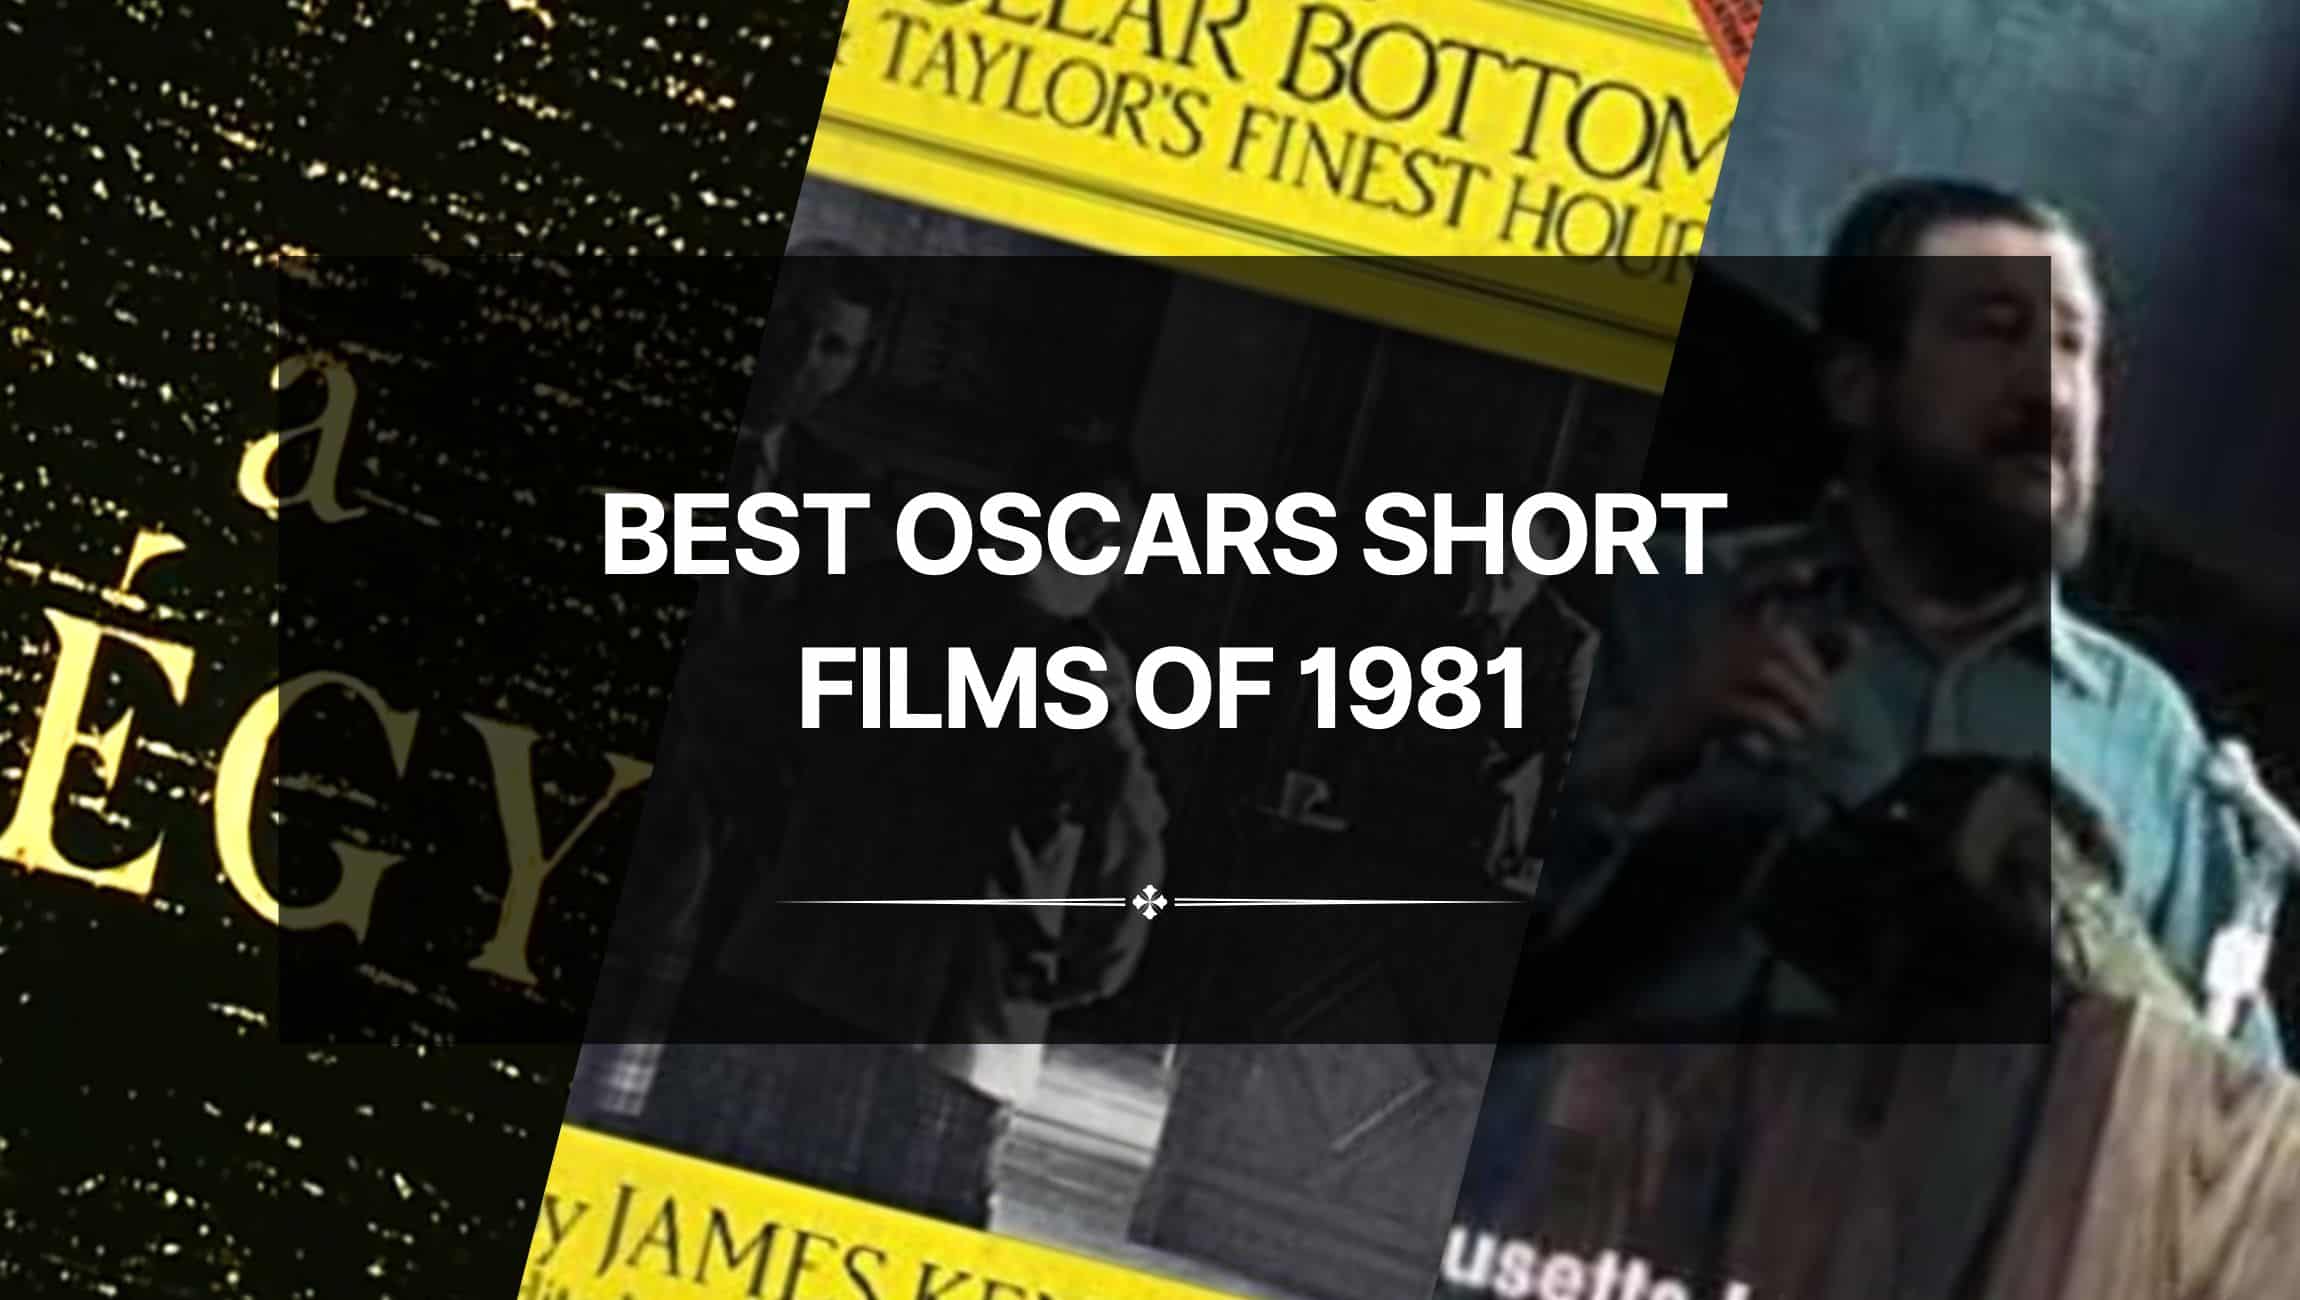 Best Oscars Short Films of 1981